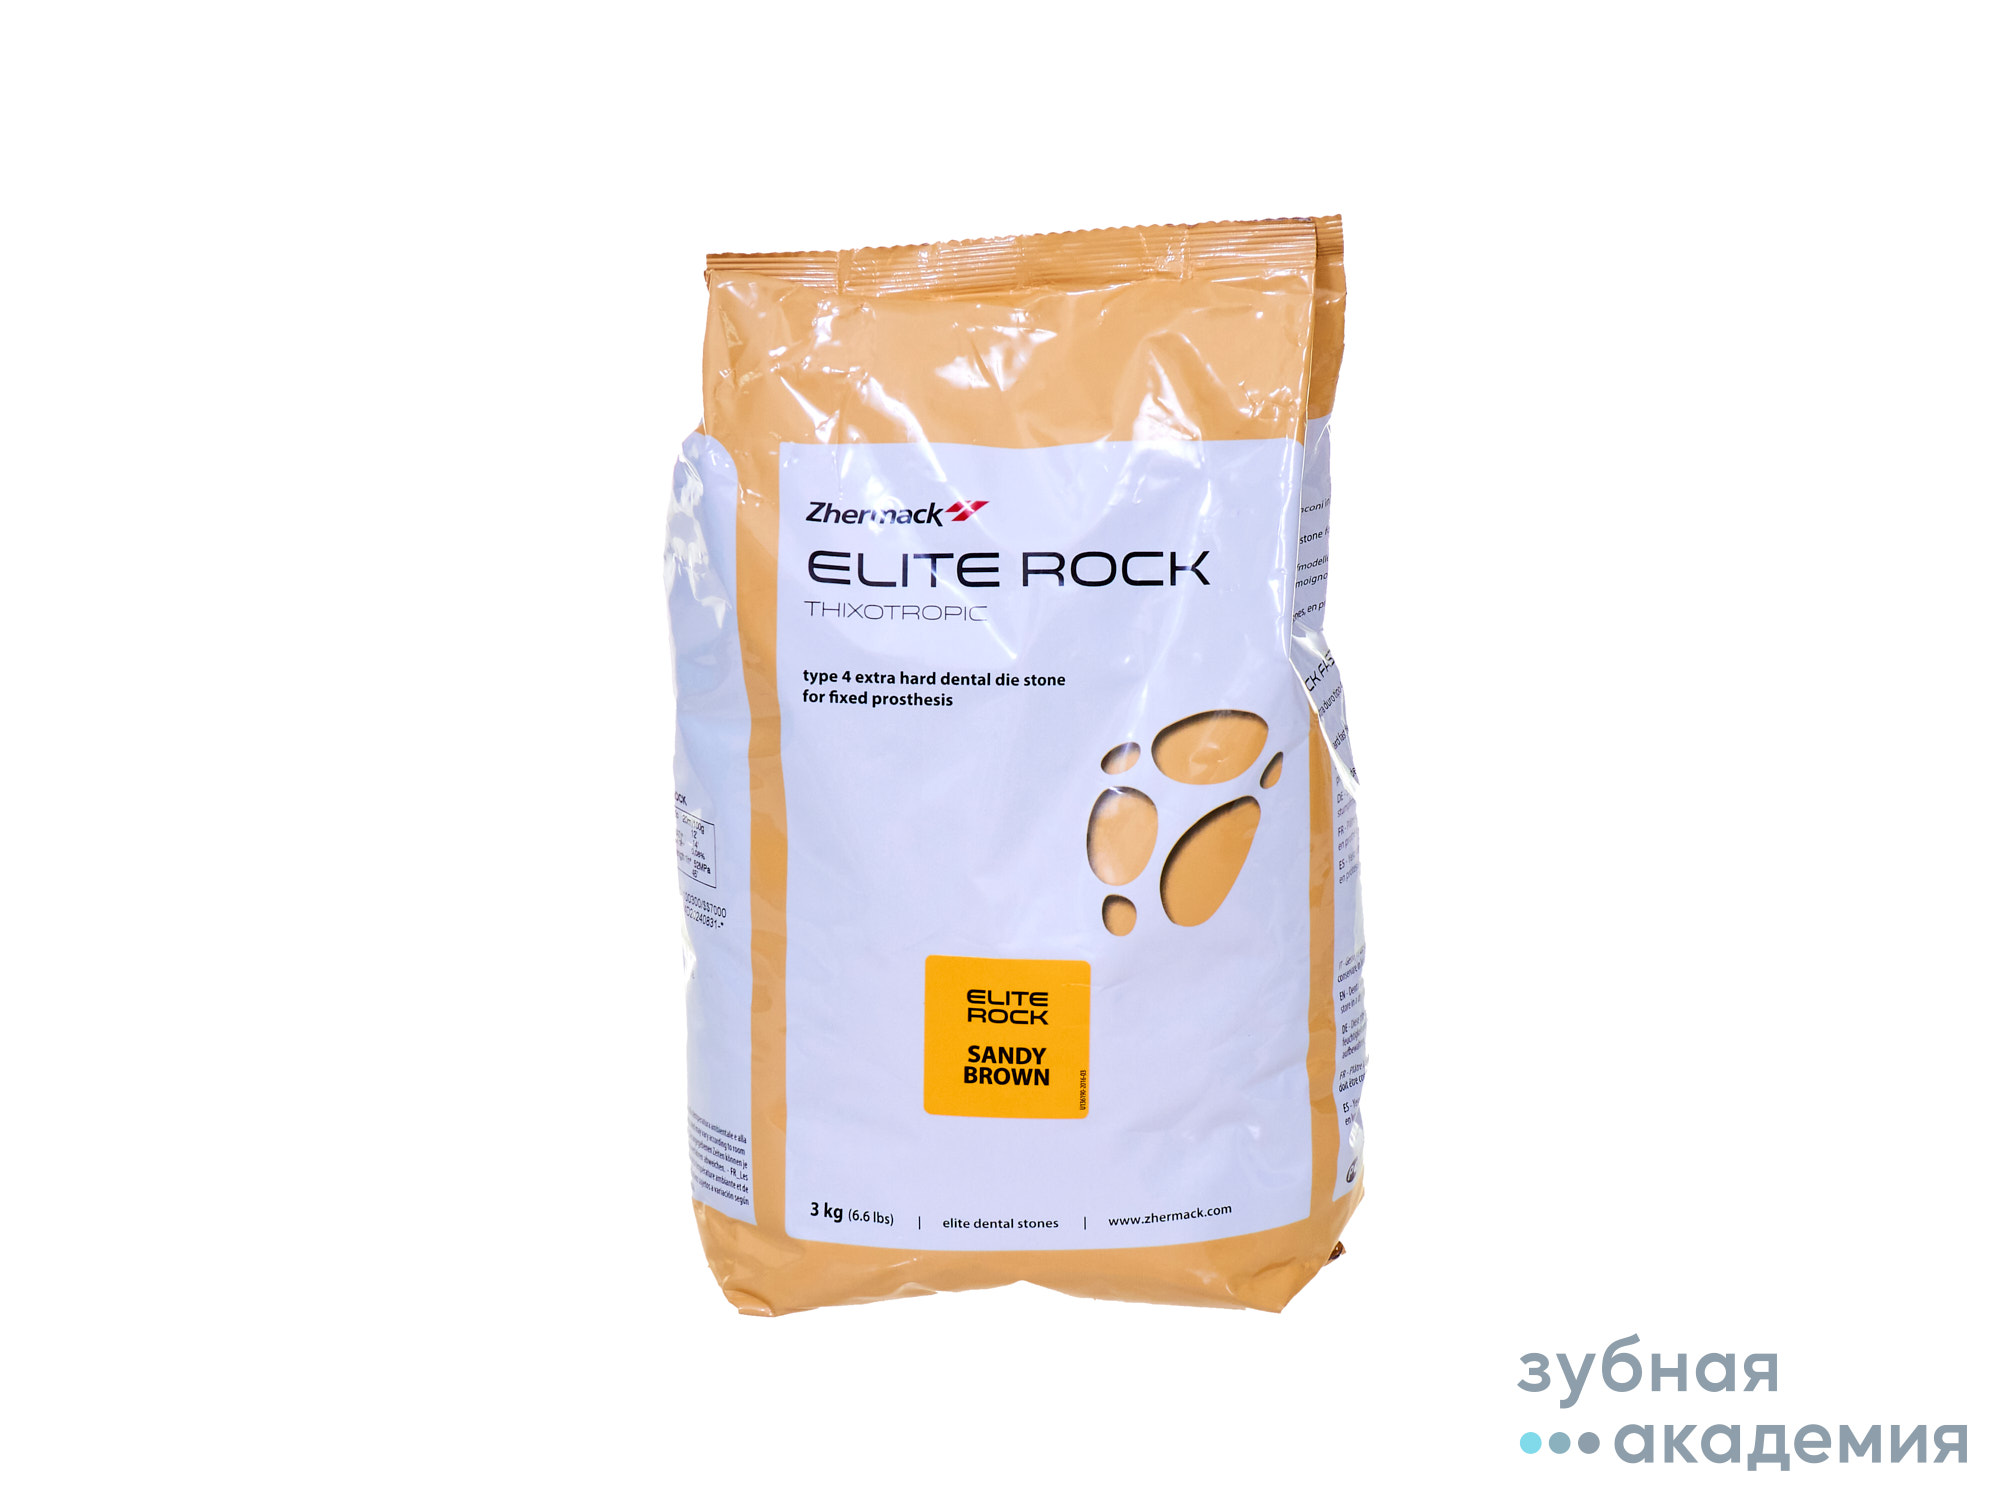 Elite Rock/Элит Рок - супергипс класс IV (3 кг), Sandy Brown (песочно-коричневый) Zhermack/ Италия